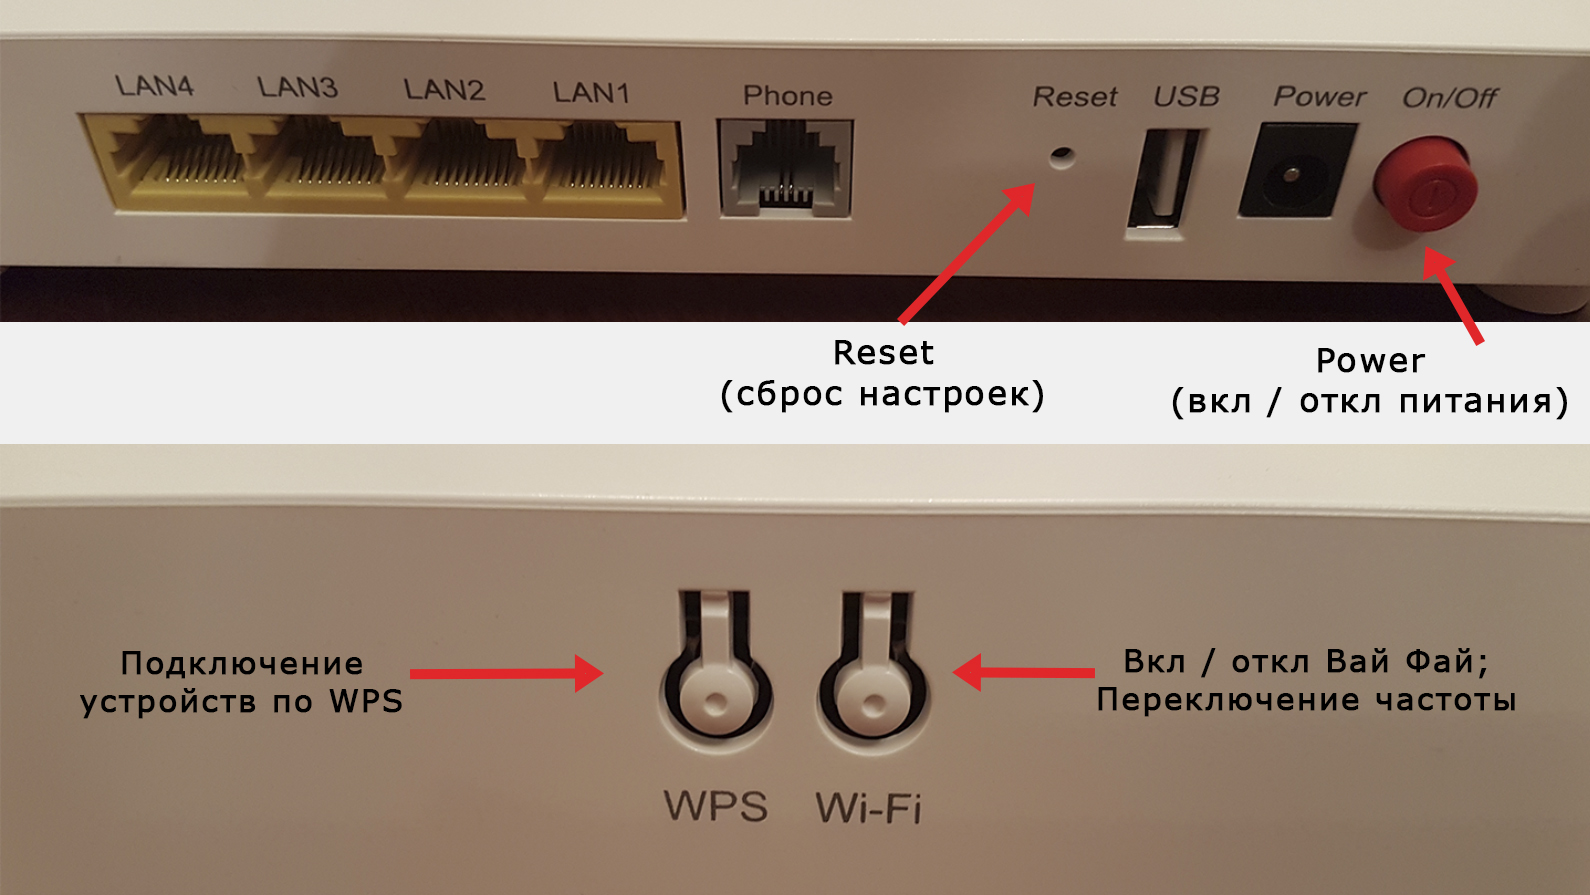 Подписанные кнопки на маршрутизаторе: power, reset, wi-fi, wps.